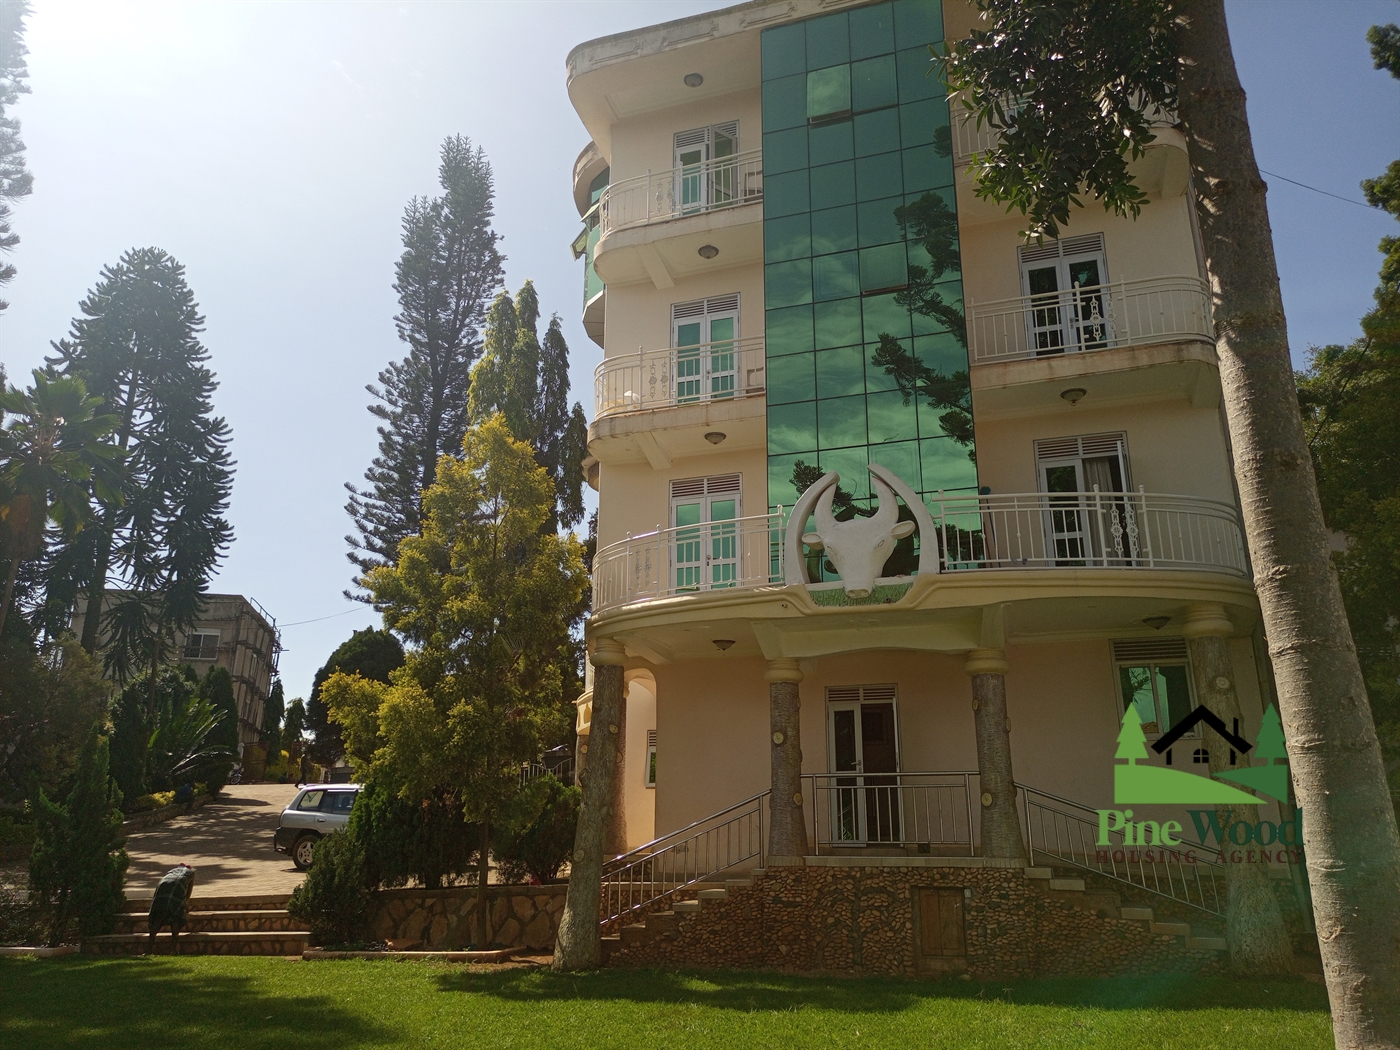 Hotel for sale in Munyonyo Kampala